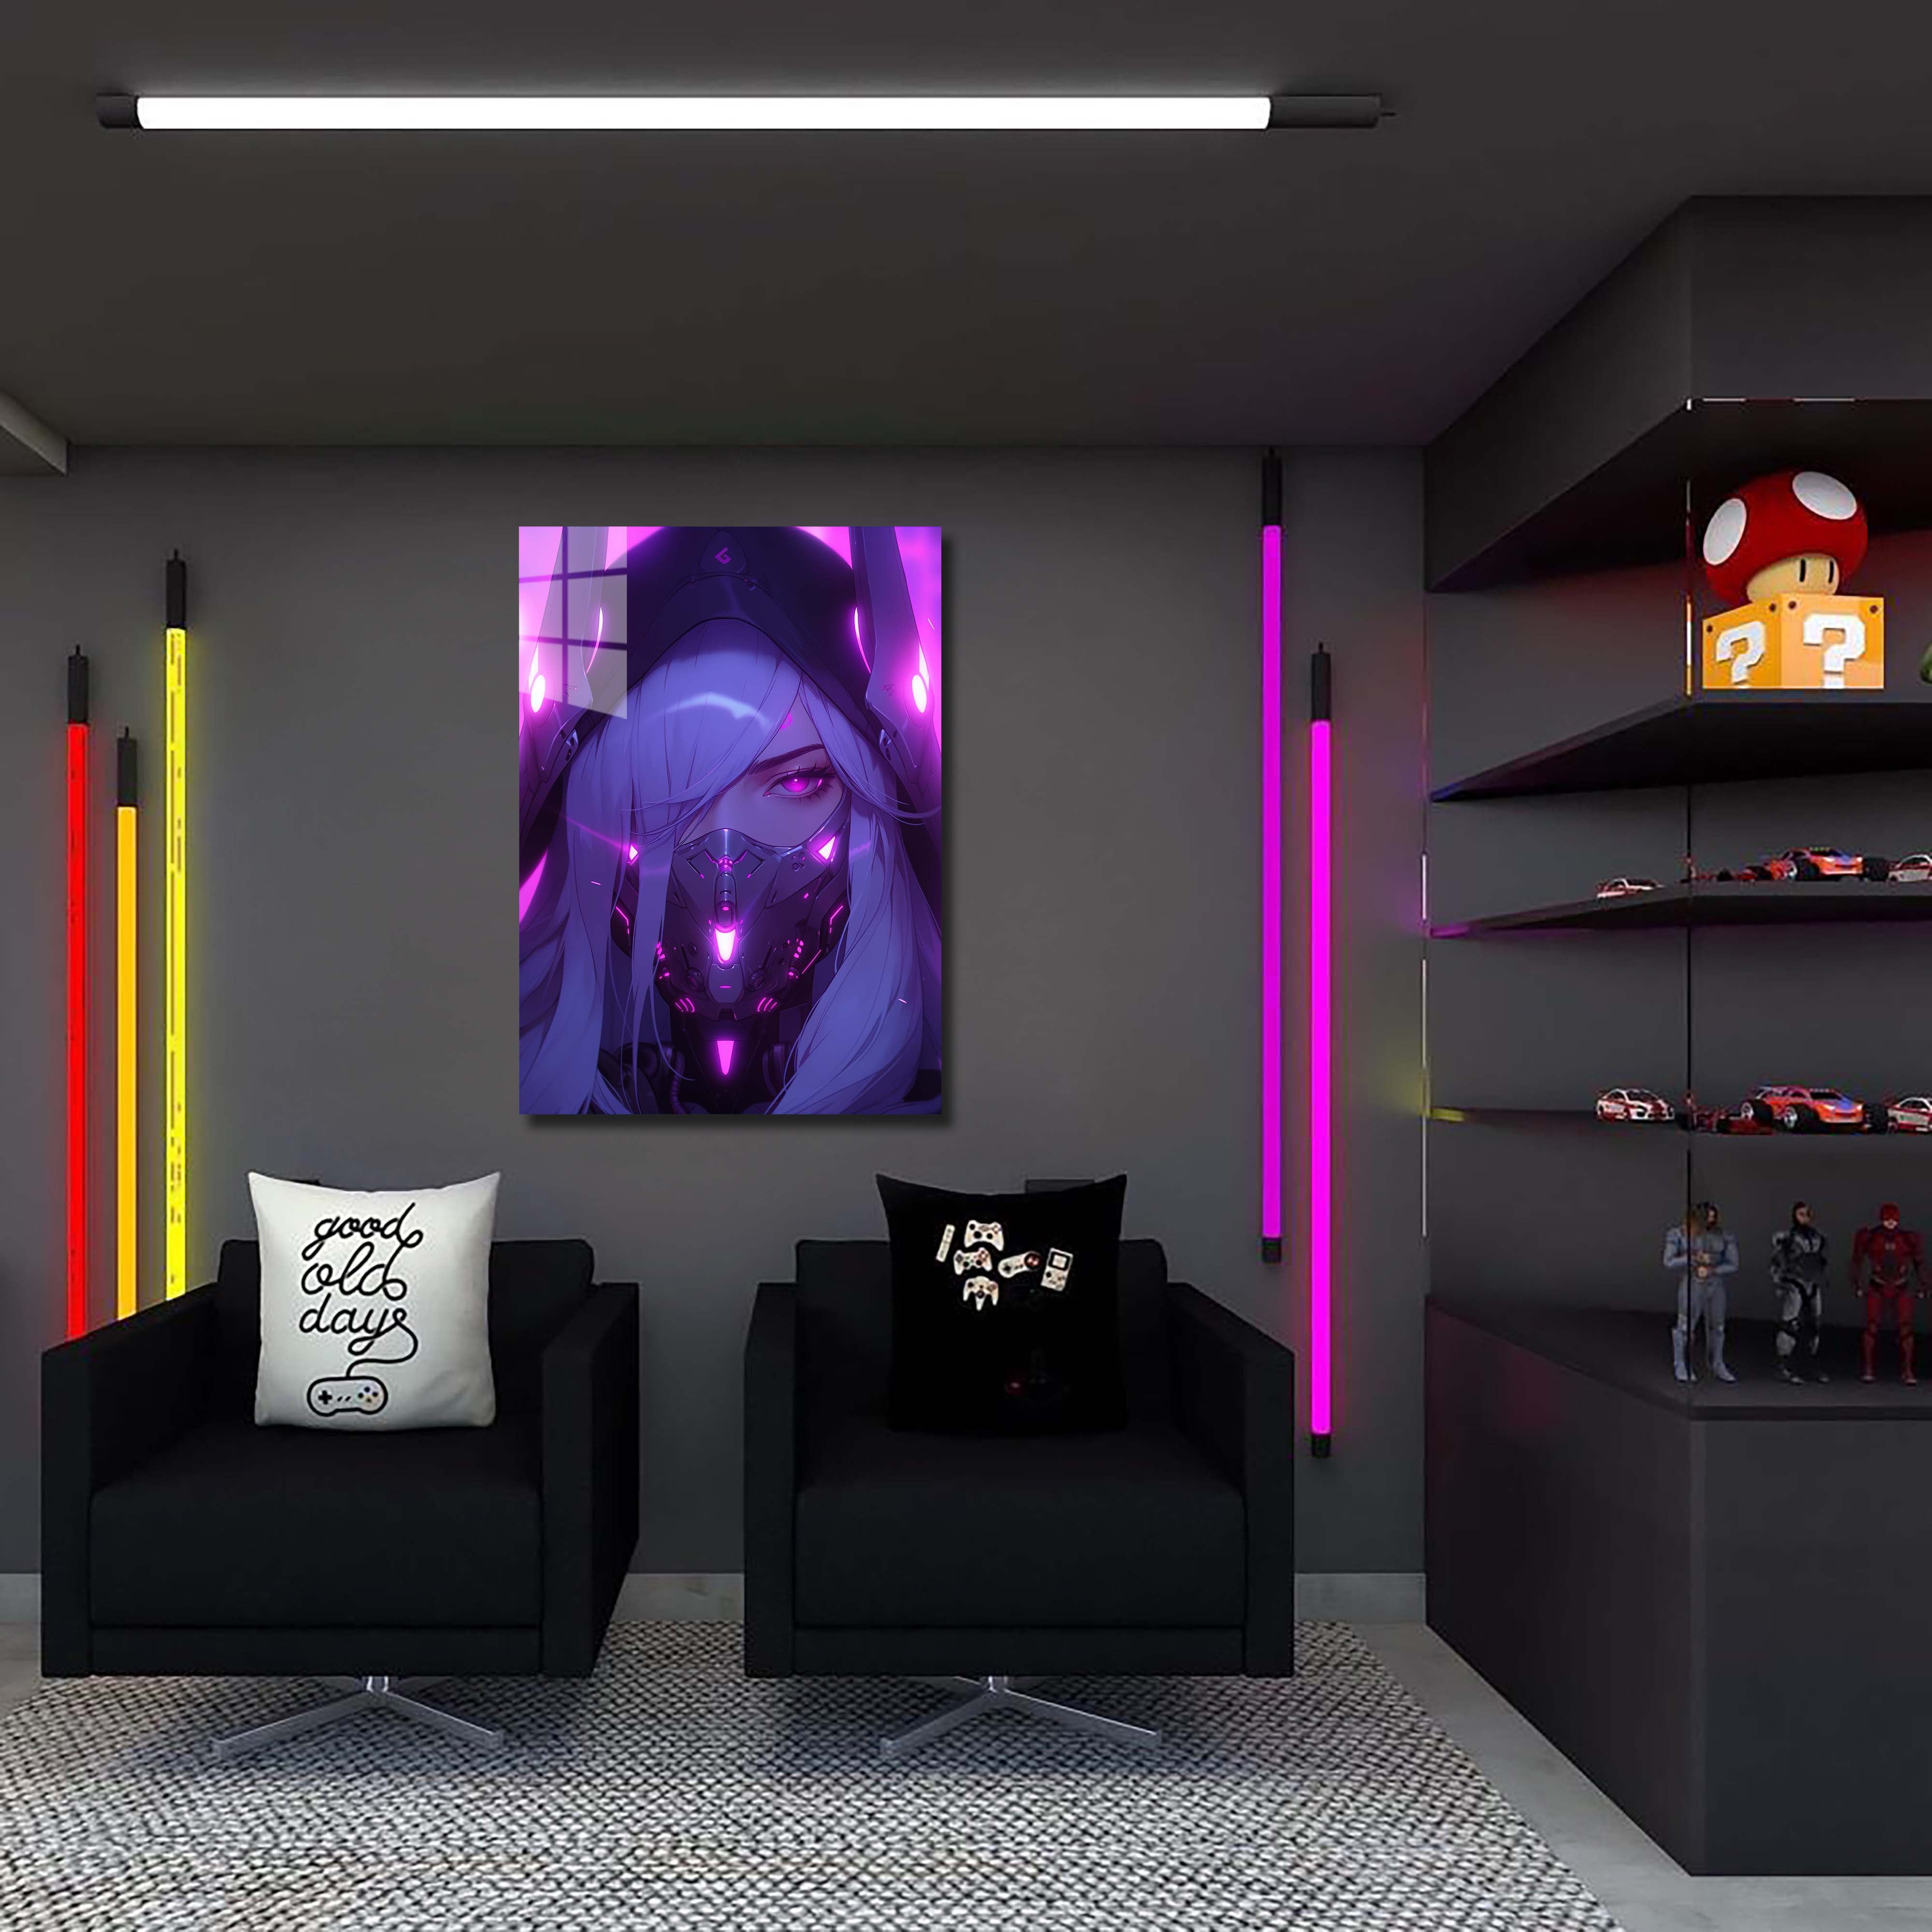 Neon Aura-designed by @Riiskaart